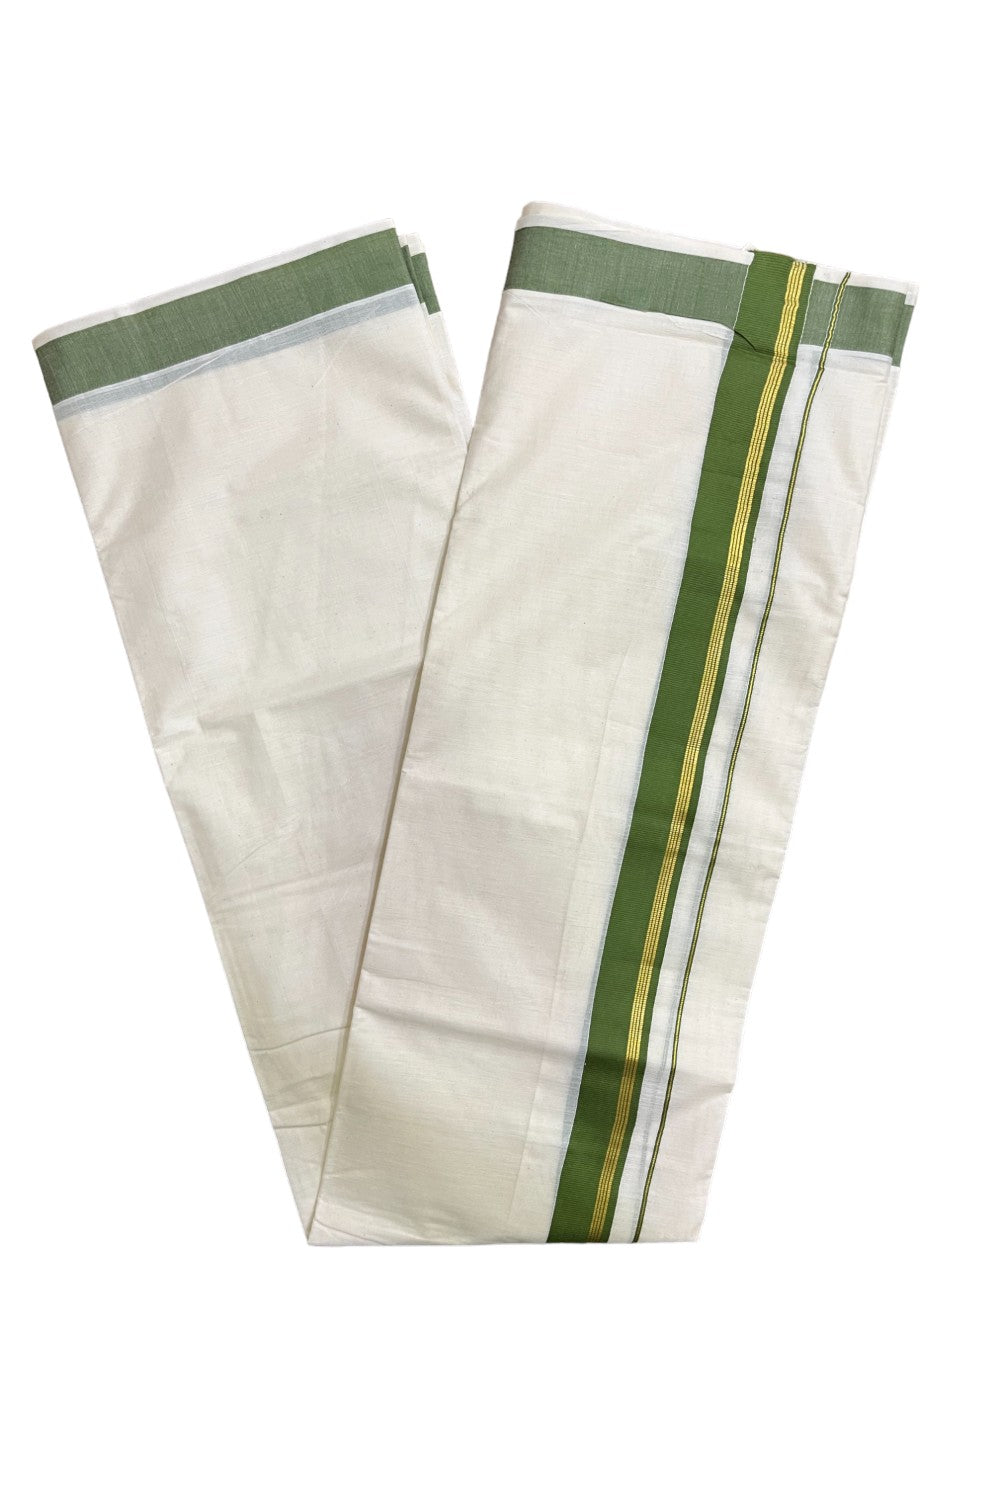 Kerala Pure Cotton Double Mundu with Olive Green and Kasavu Border (South Indian Kerala Dhoti)